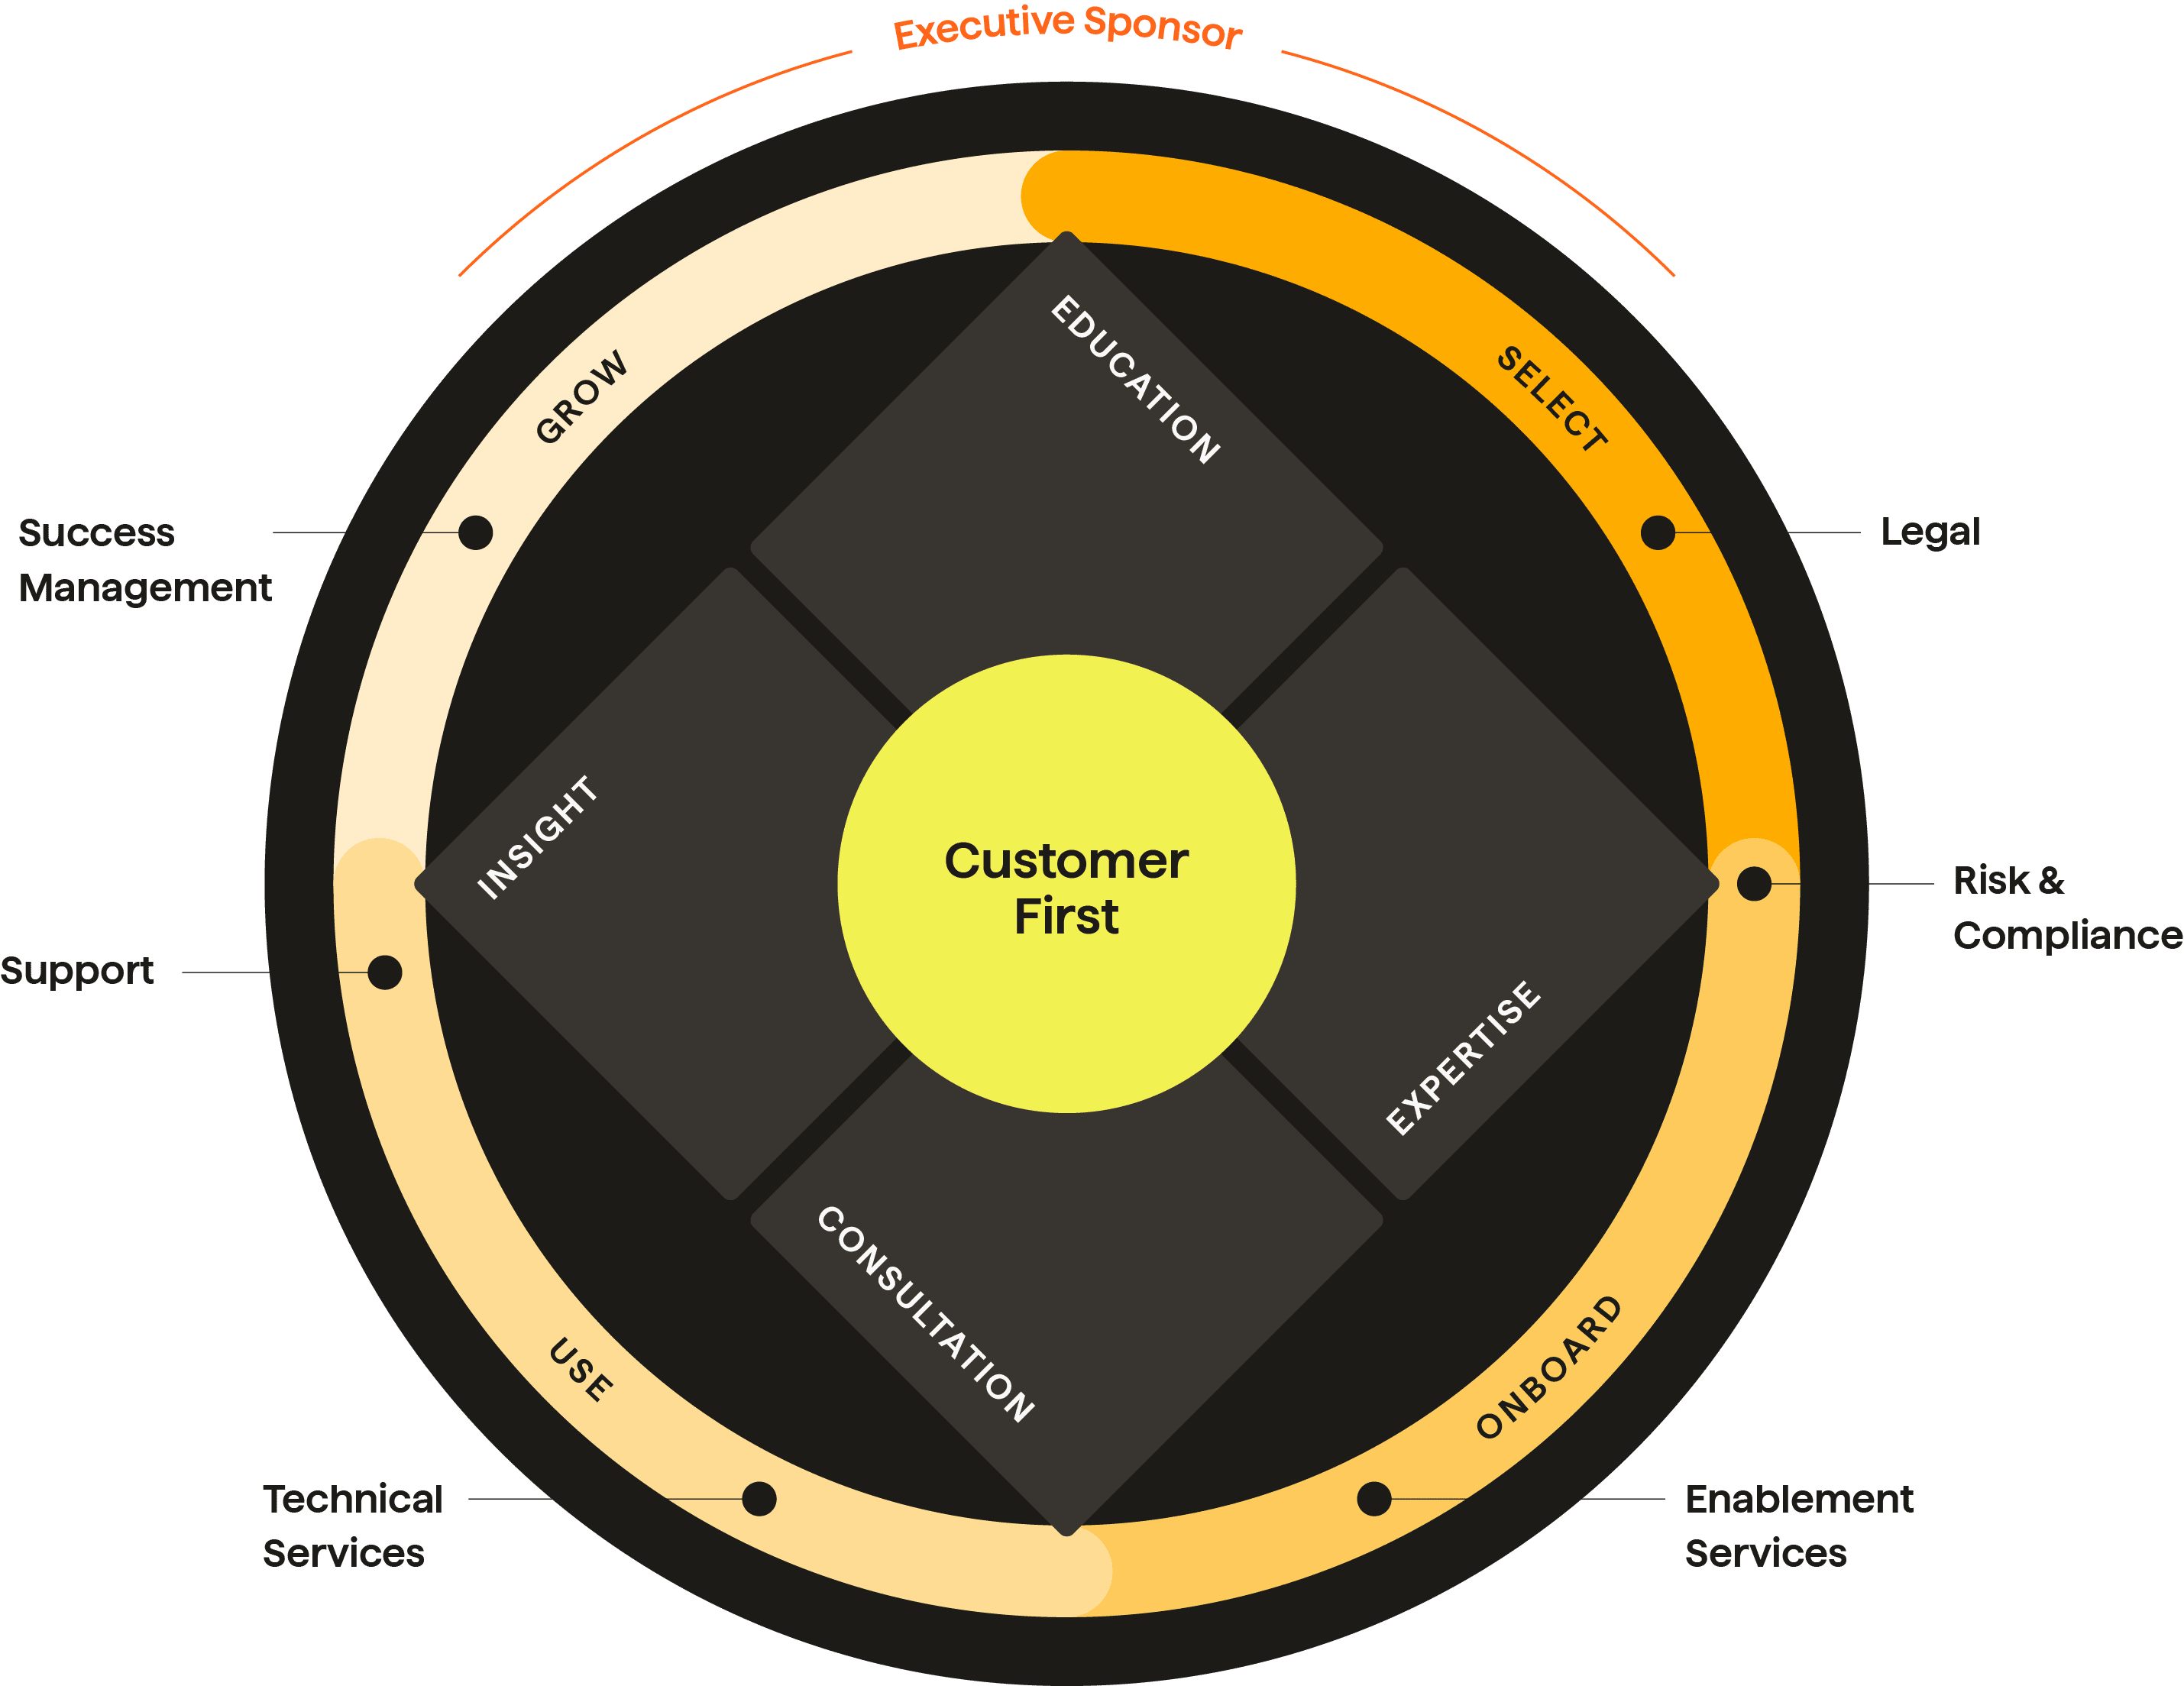 Our Customer First framework